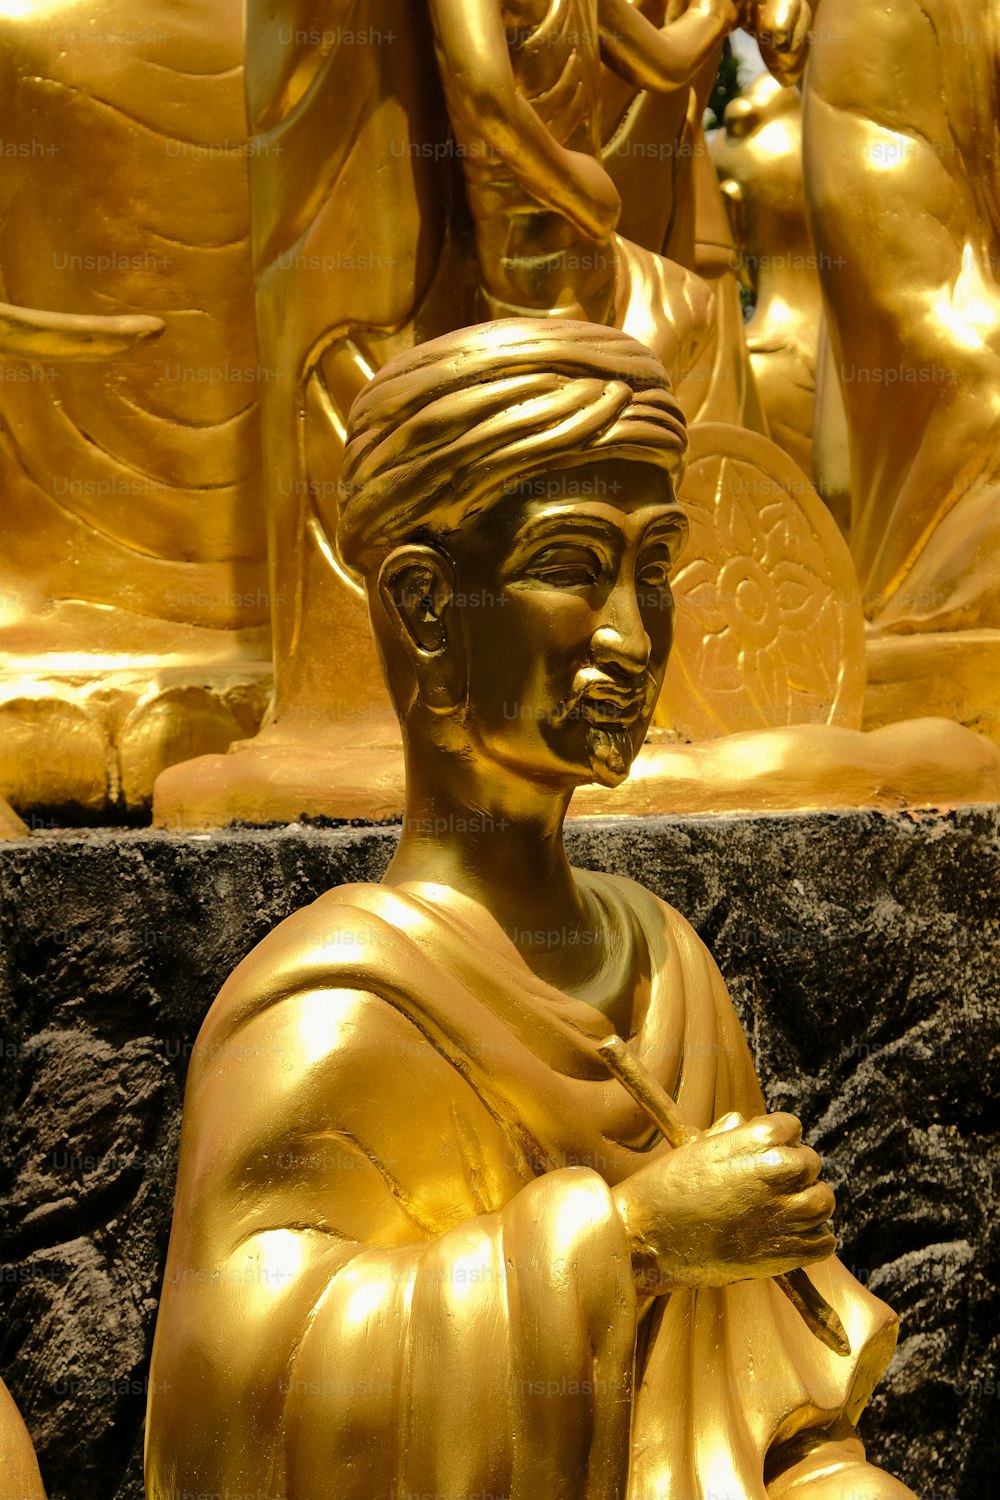 a golden statue of a woman holding a flower